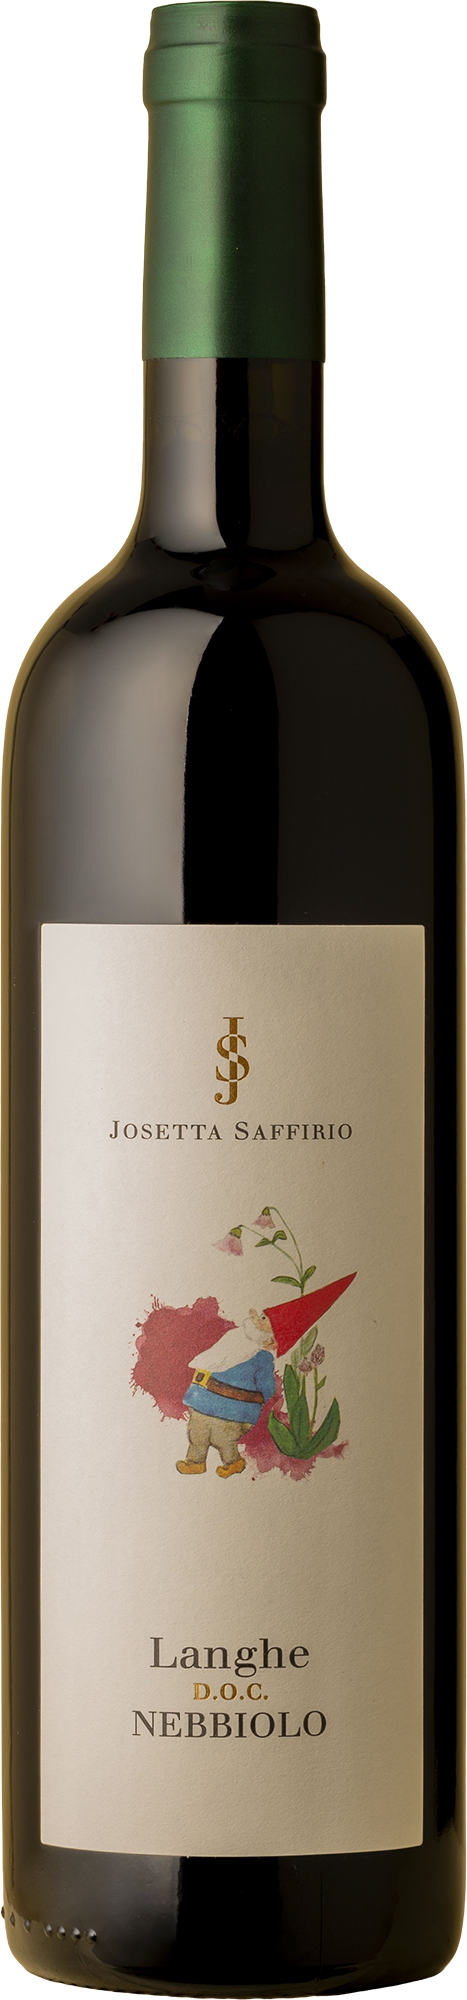 Josetta Saffirio - Langhe Nebbiolo 2020 Red Wine